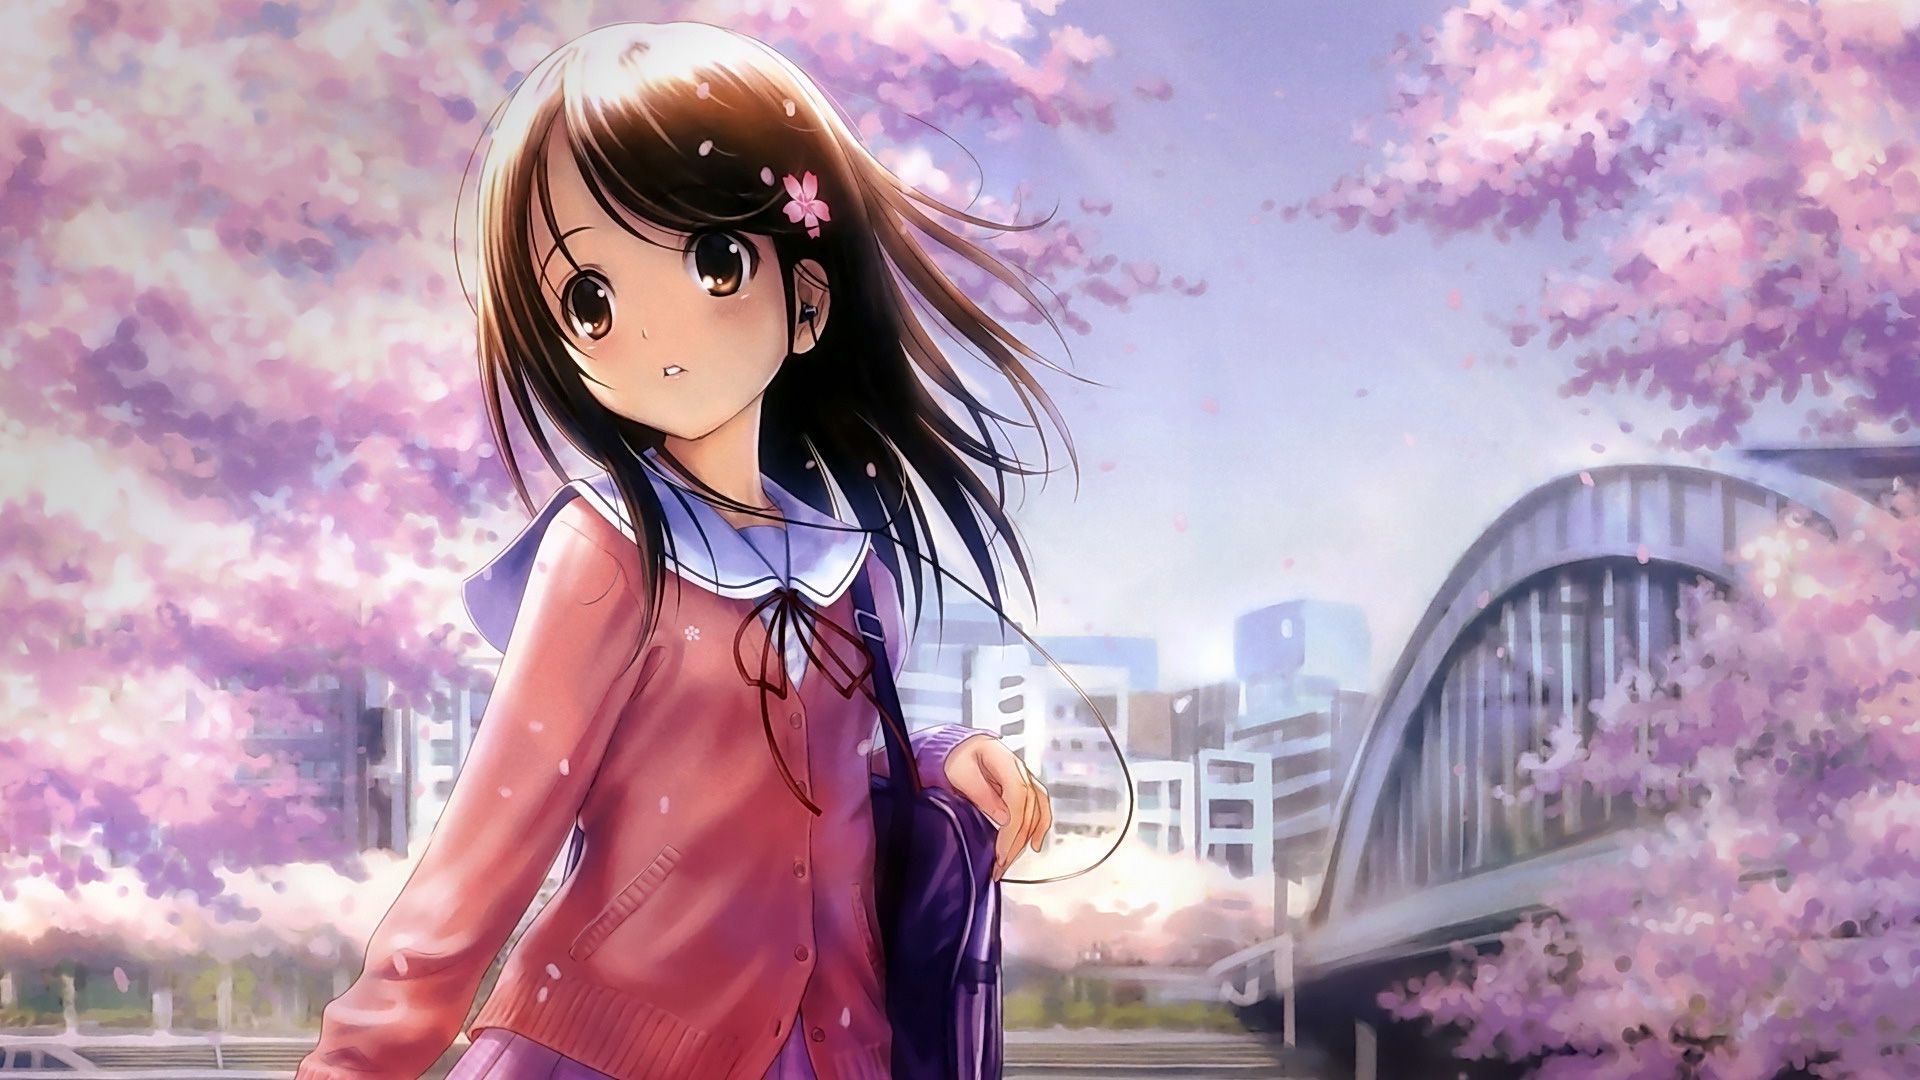 Free download Anime Schoolgirl Full HD wallpaper 1080p pink